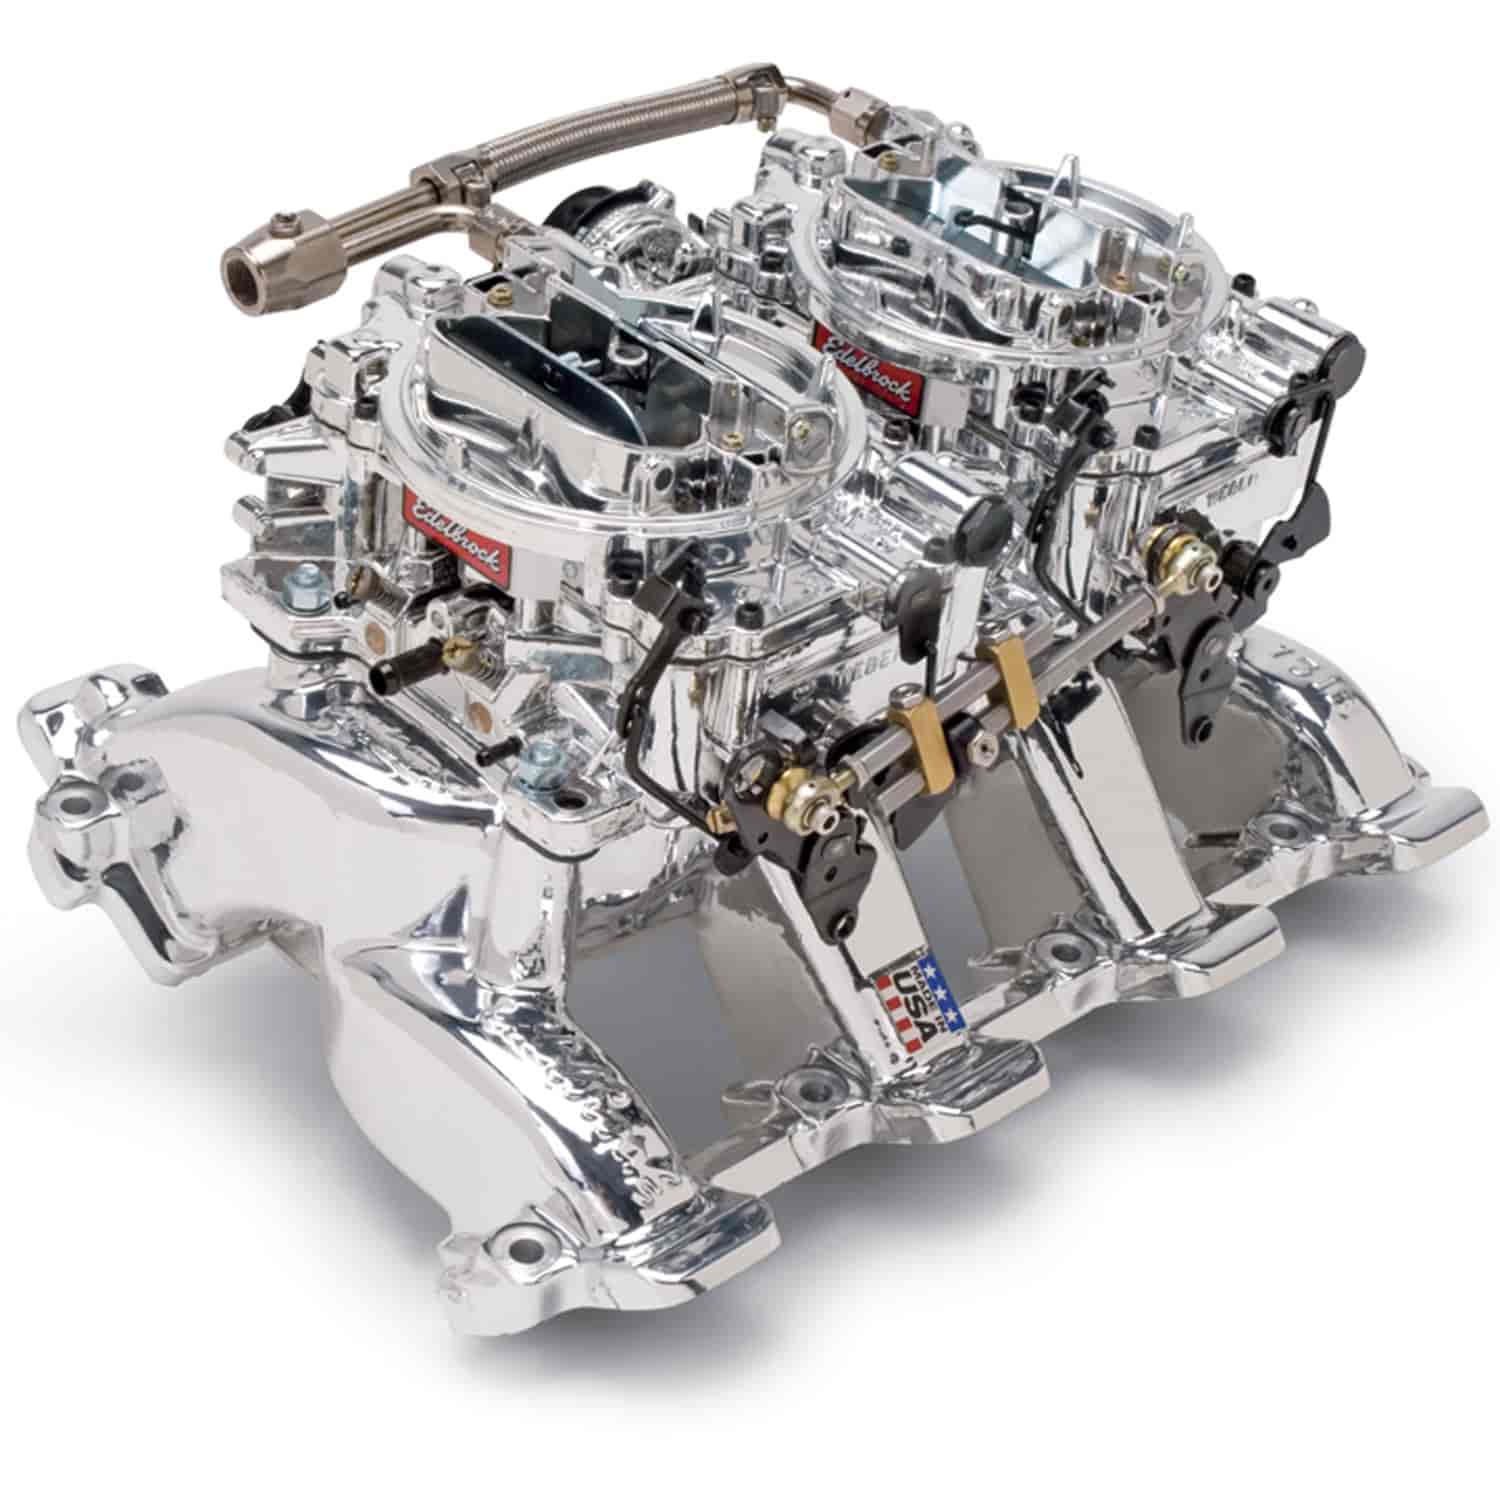 RPM Dual-Quad Manifold and Carburetor Kit for Chevy GEN III LS1 with Endurashine Finish